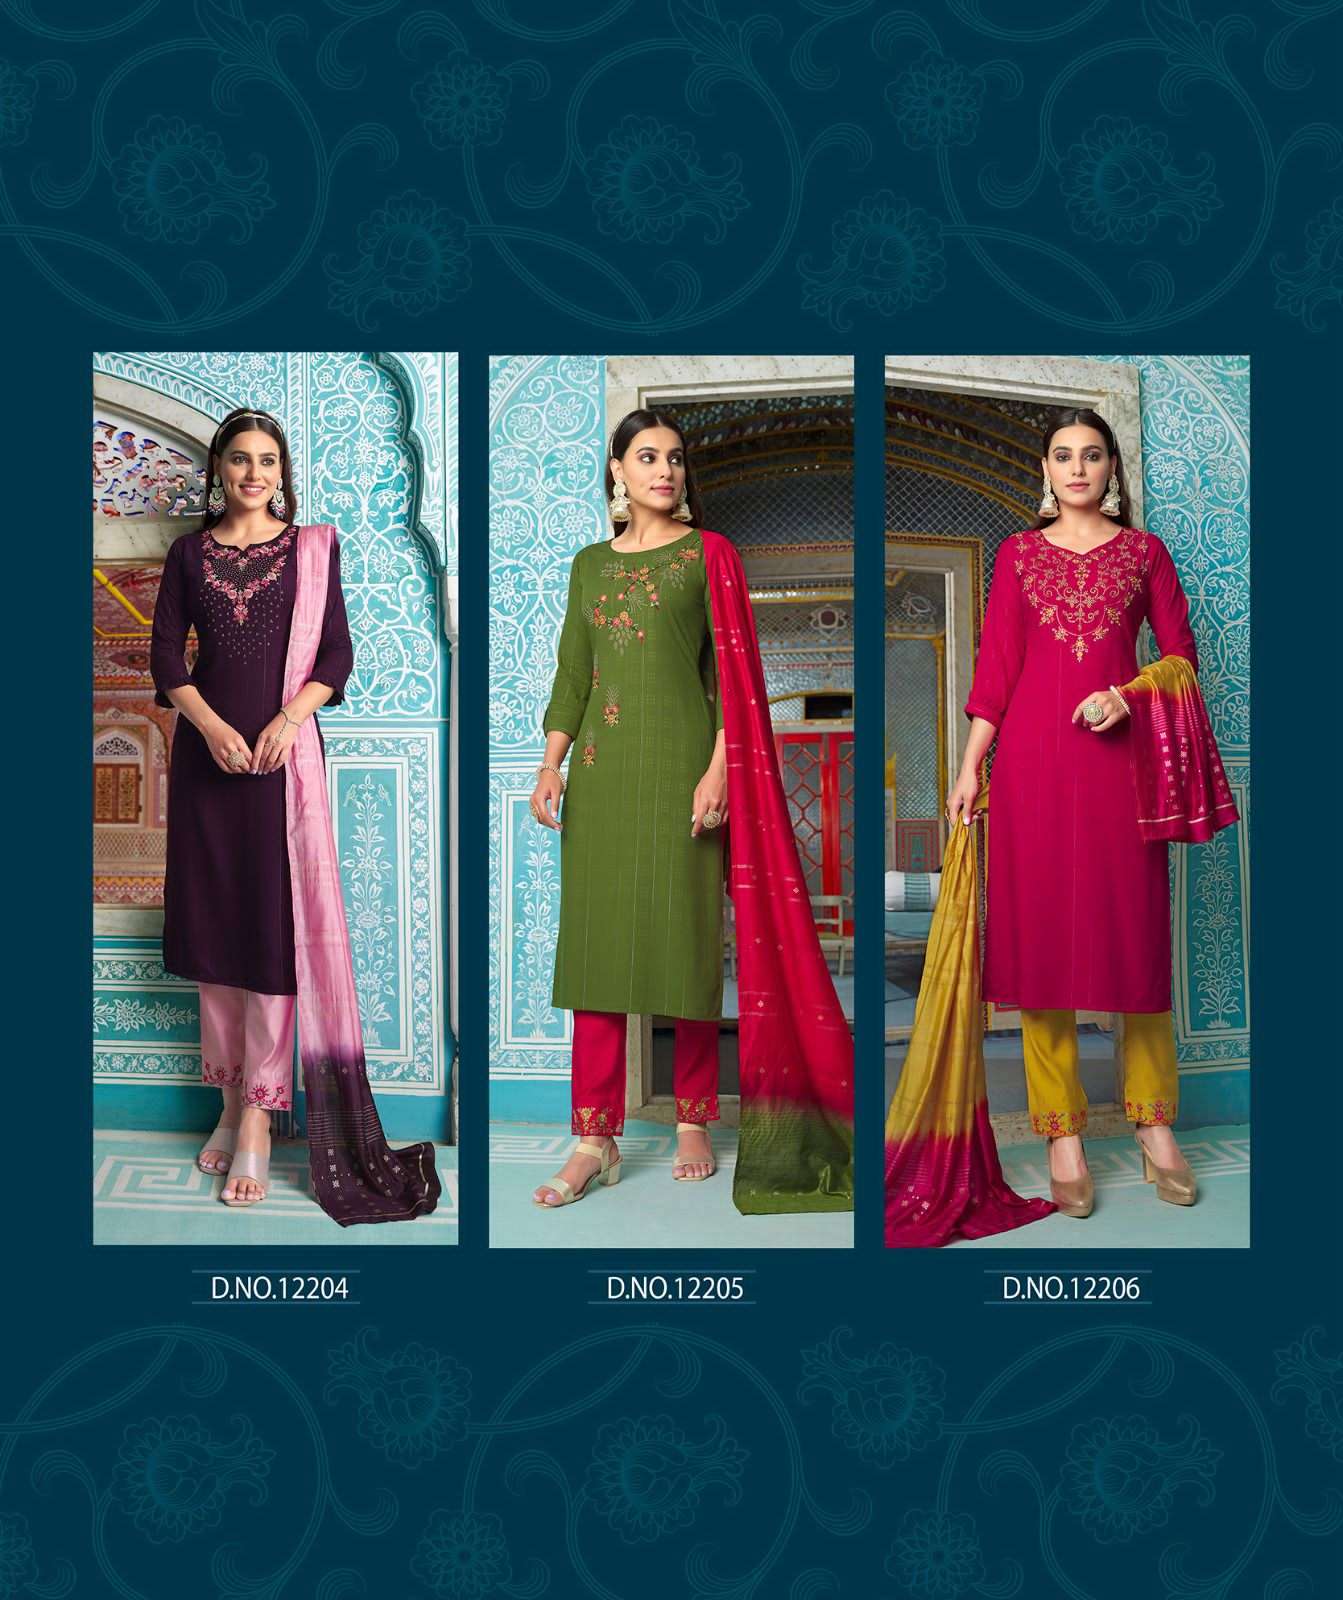 lily&lali moonlite elegance 12201-12206 series exclusive designer kurtis festival collection surat